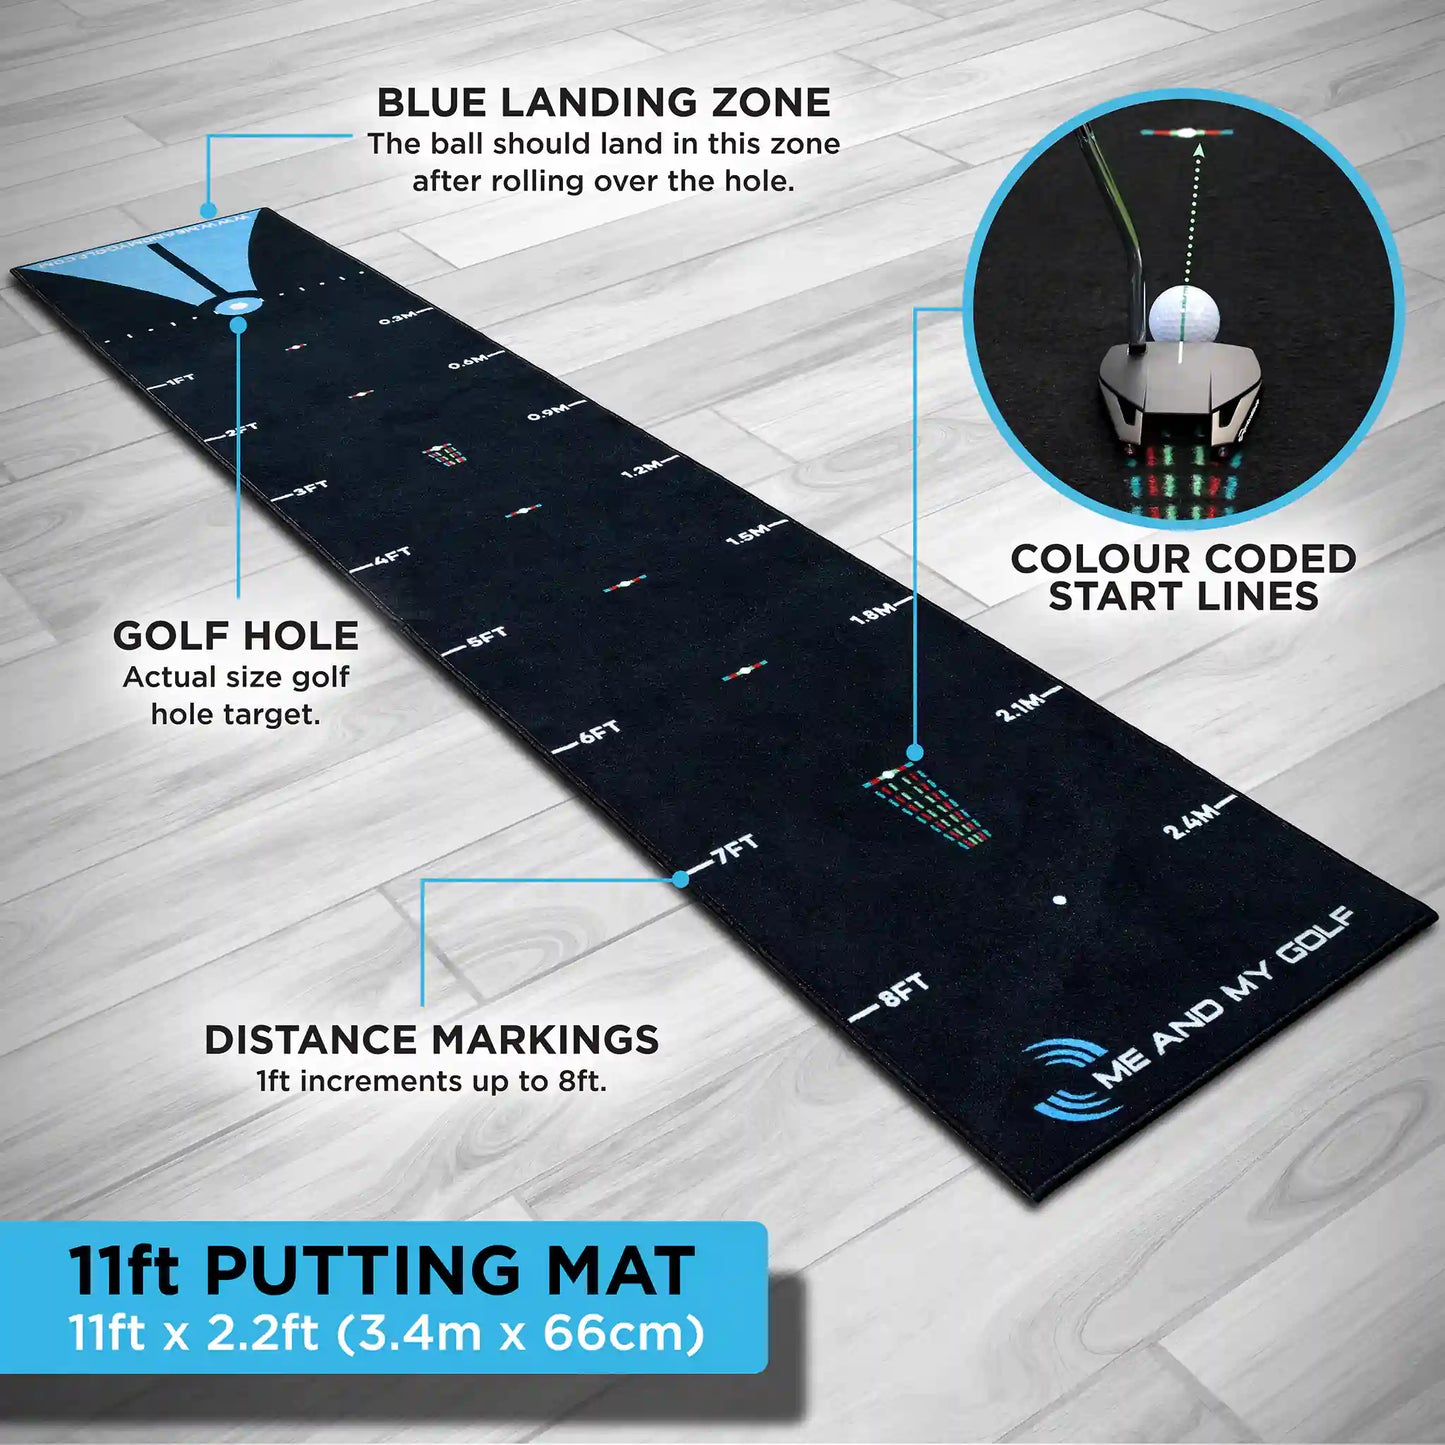 Breaking Ball Putting Mat infographic